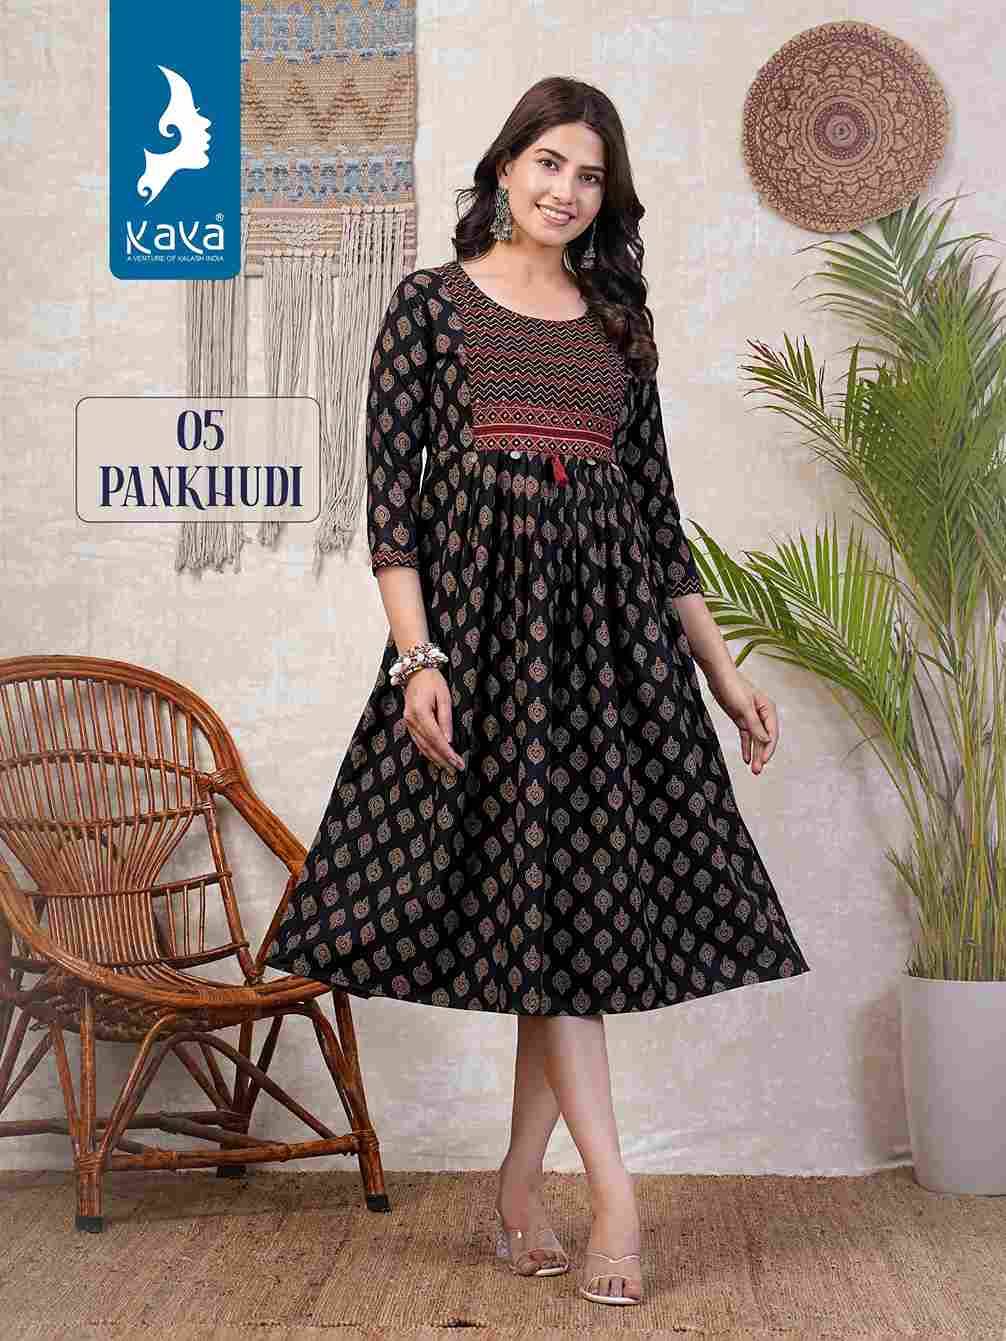 Pankhudi By Kaya 01 To 06 Series Designer Stylish Fancy Colorful Beautiful Party Wear & Ethnic Wear Collection Cotton Kurtis At Wholesale Price